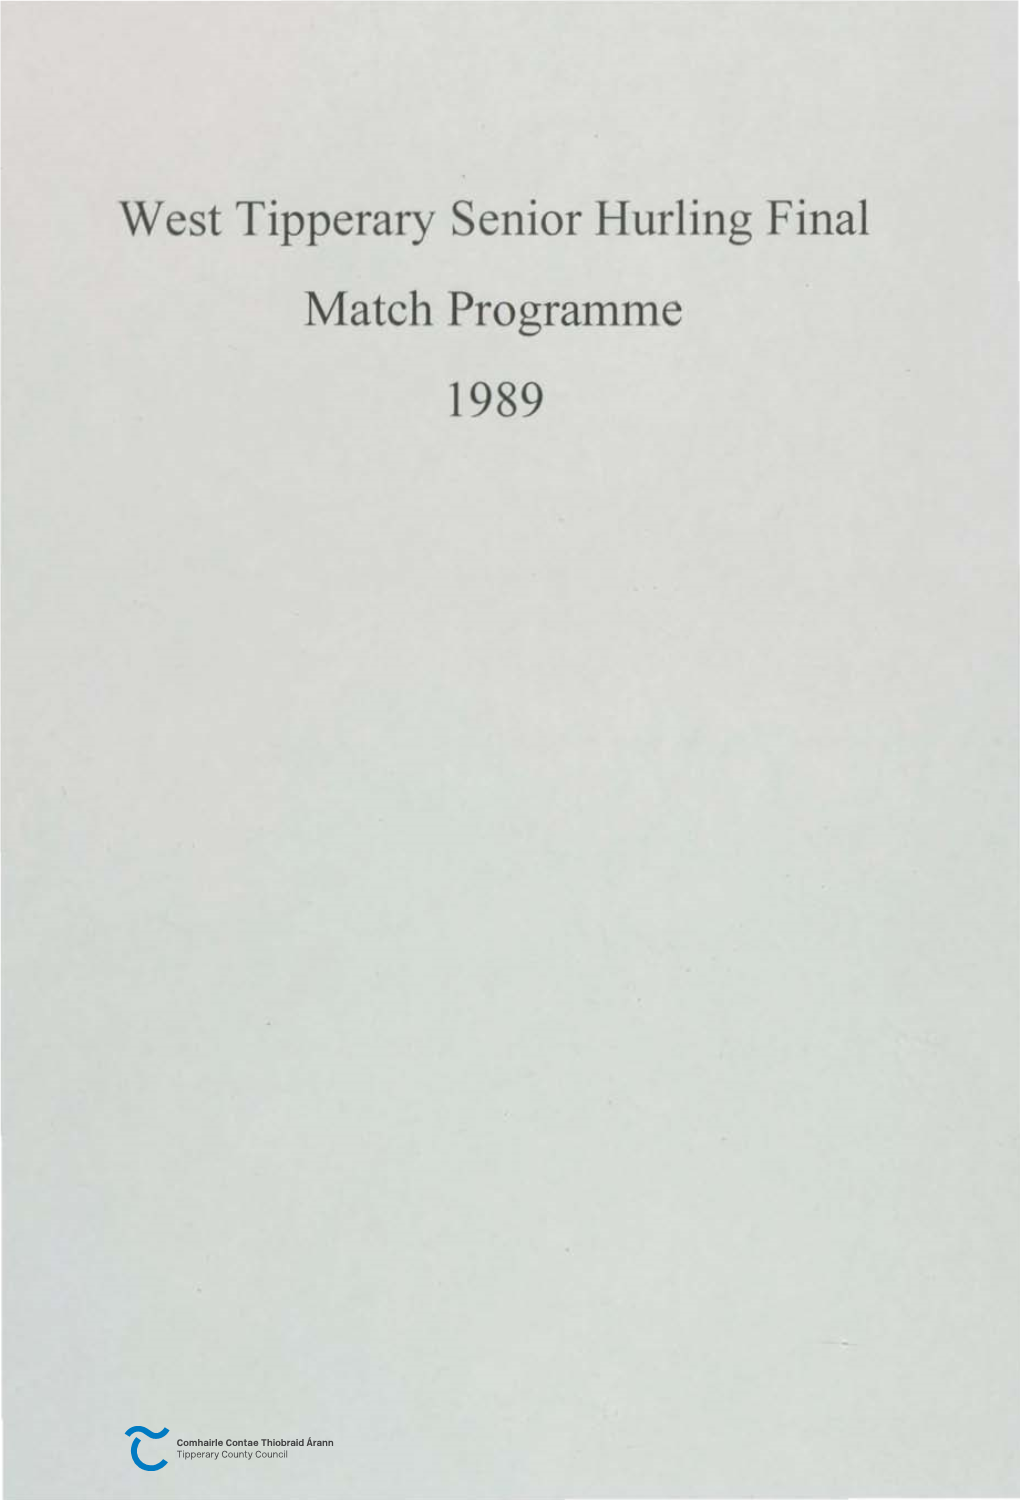 West Tipperary Senior Hurling Final Match Programme 1989 CUMANN LUTH-CHLEAS GAEL - TIOBRAID a RANN THIAR